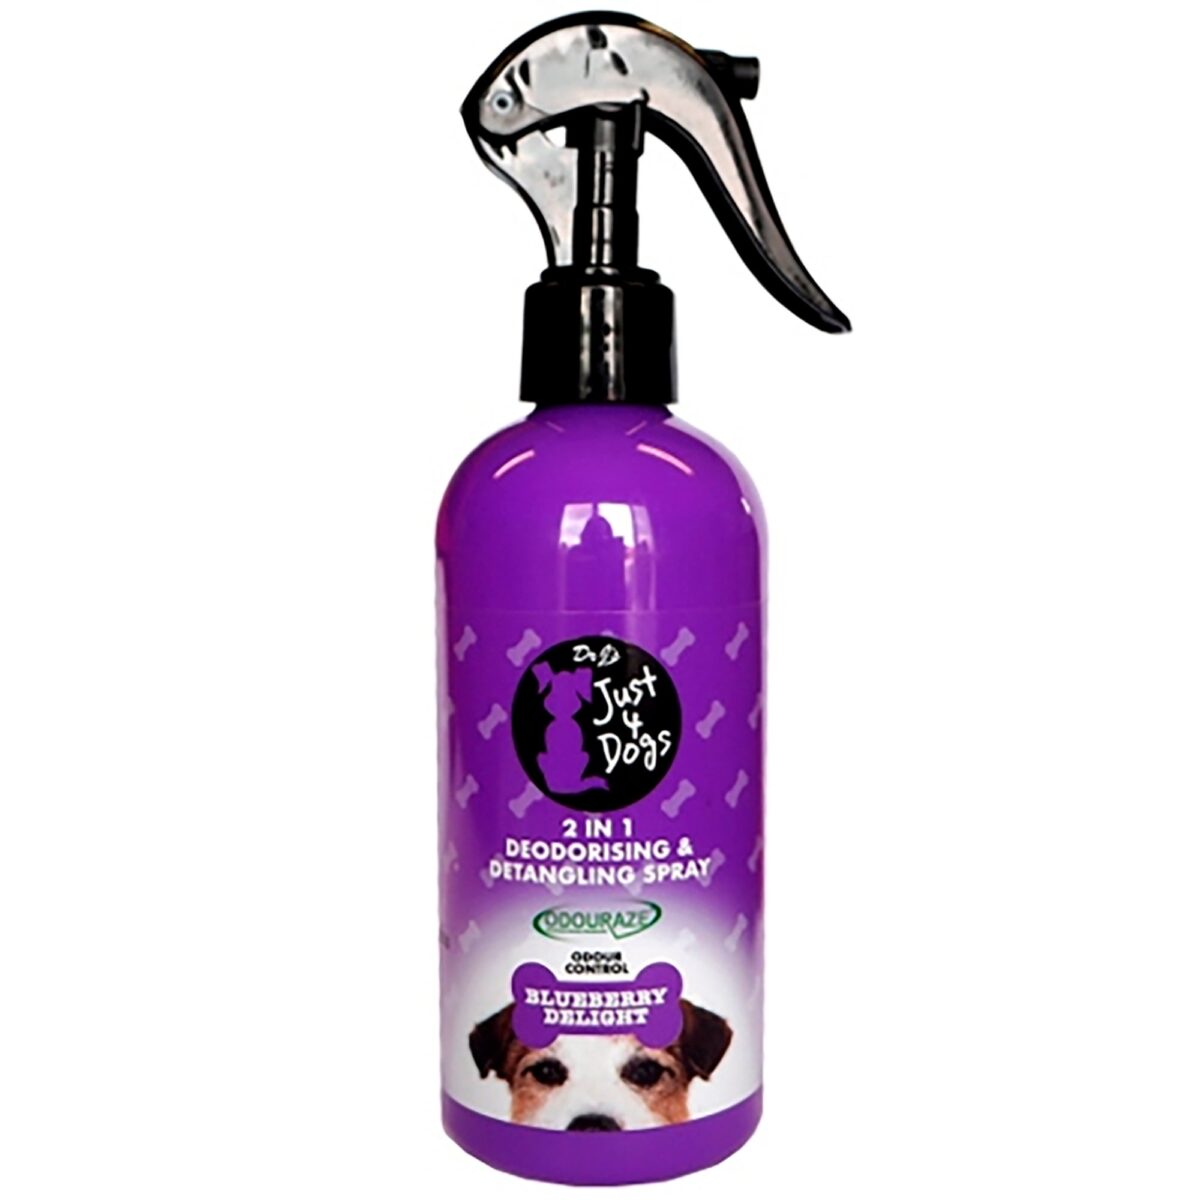 Dr J's Just 4 Dogs 2In1 Deodorising & Detangle Spray Blueberry 300ml ...